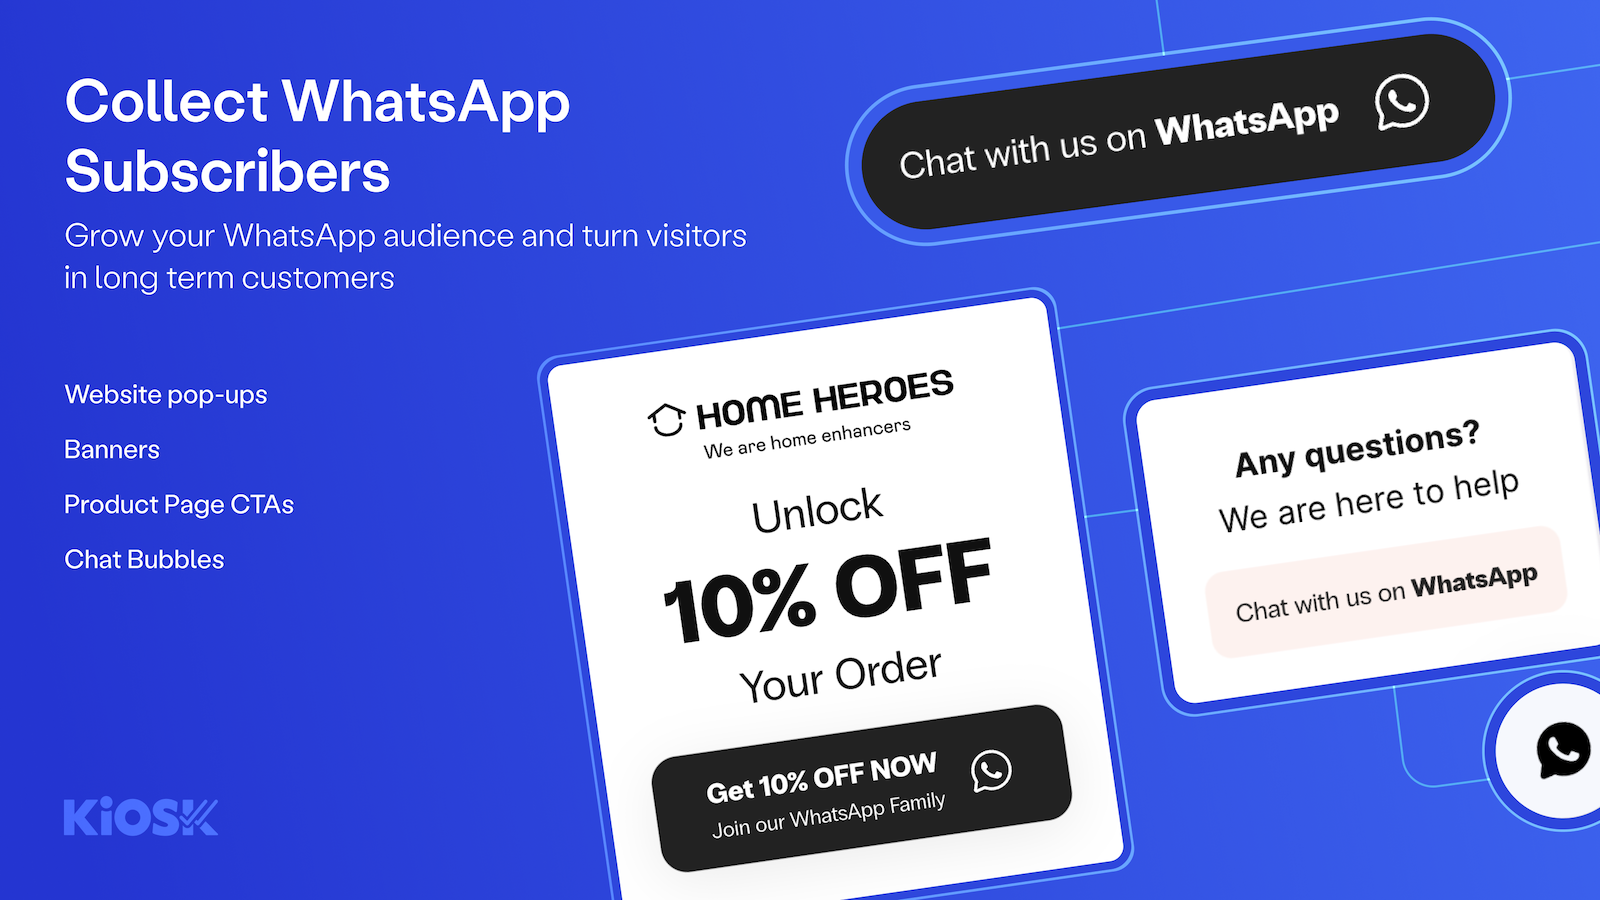 Indsamle WhatsApp abonnenter og administrer dit publikum